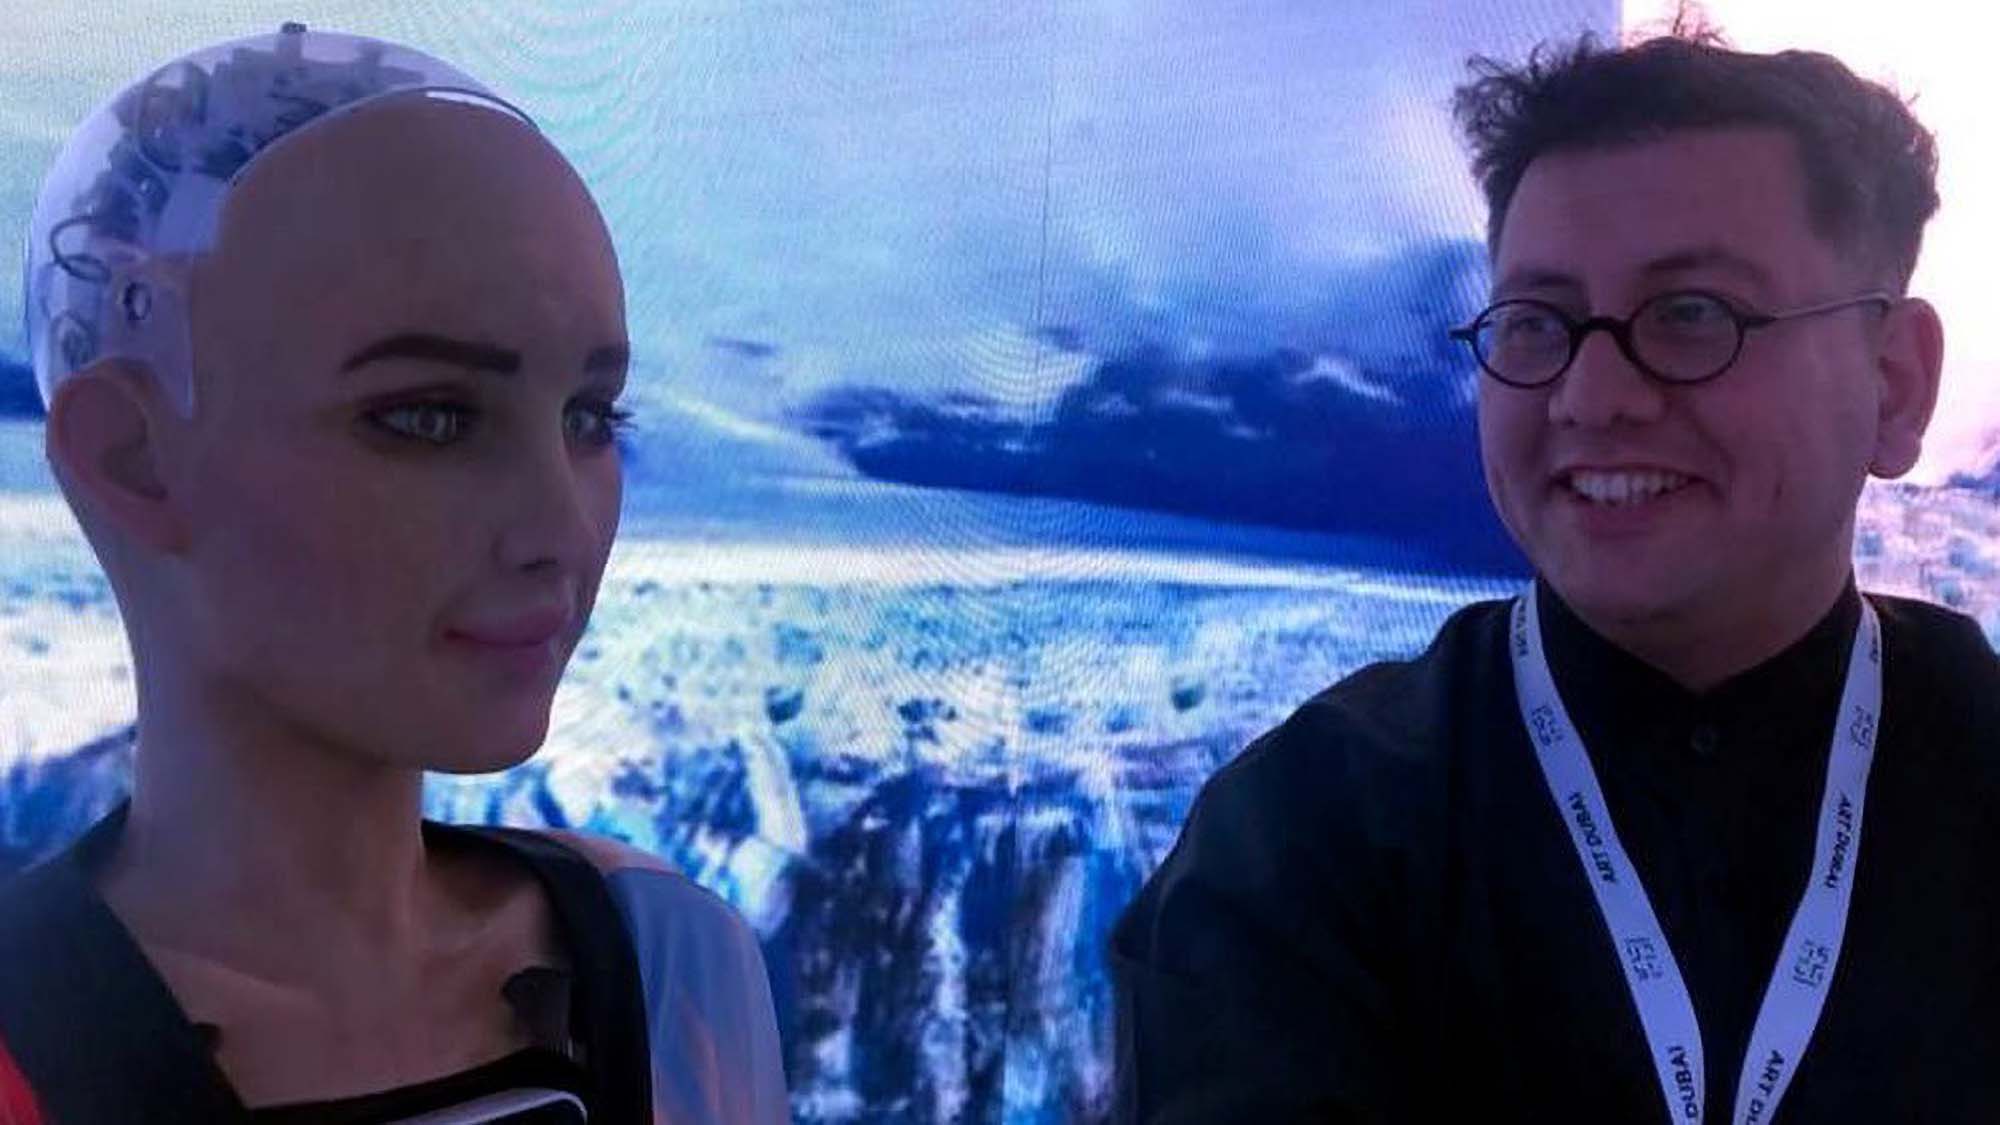 Sophia The Robot Stuns Public During Surprise Appearance At Dubai Art Fair